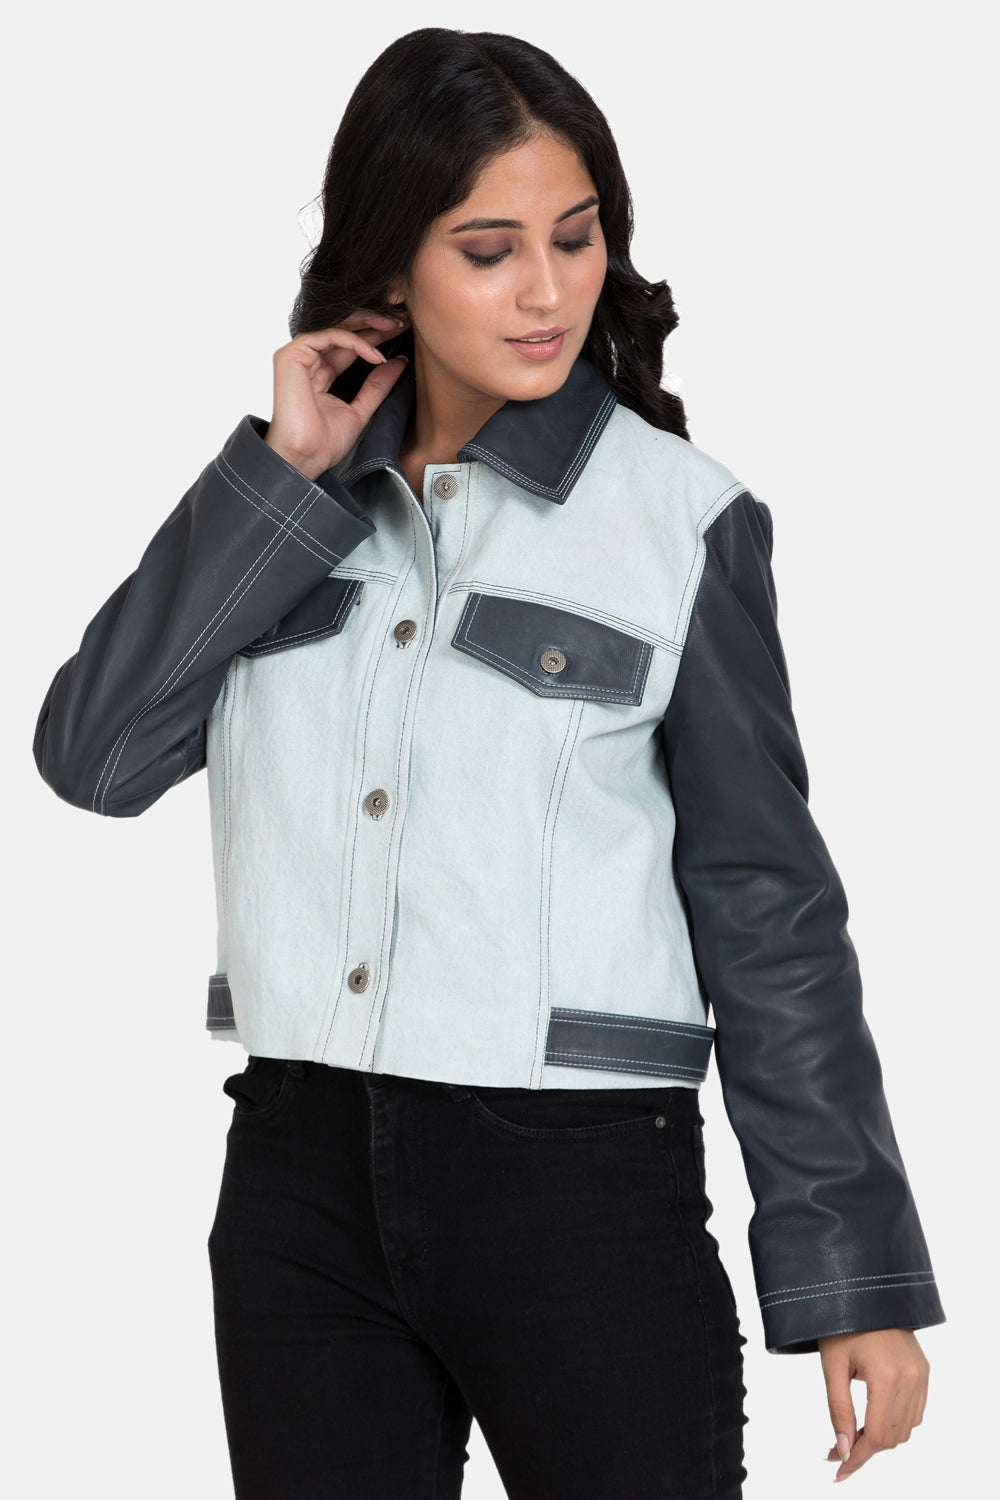 Top 116+ leather jacket or denim jacket latest